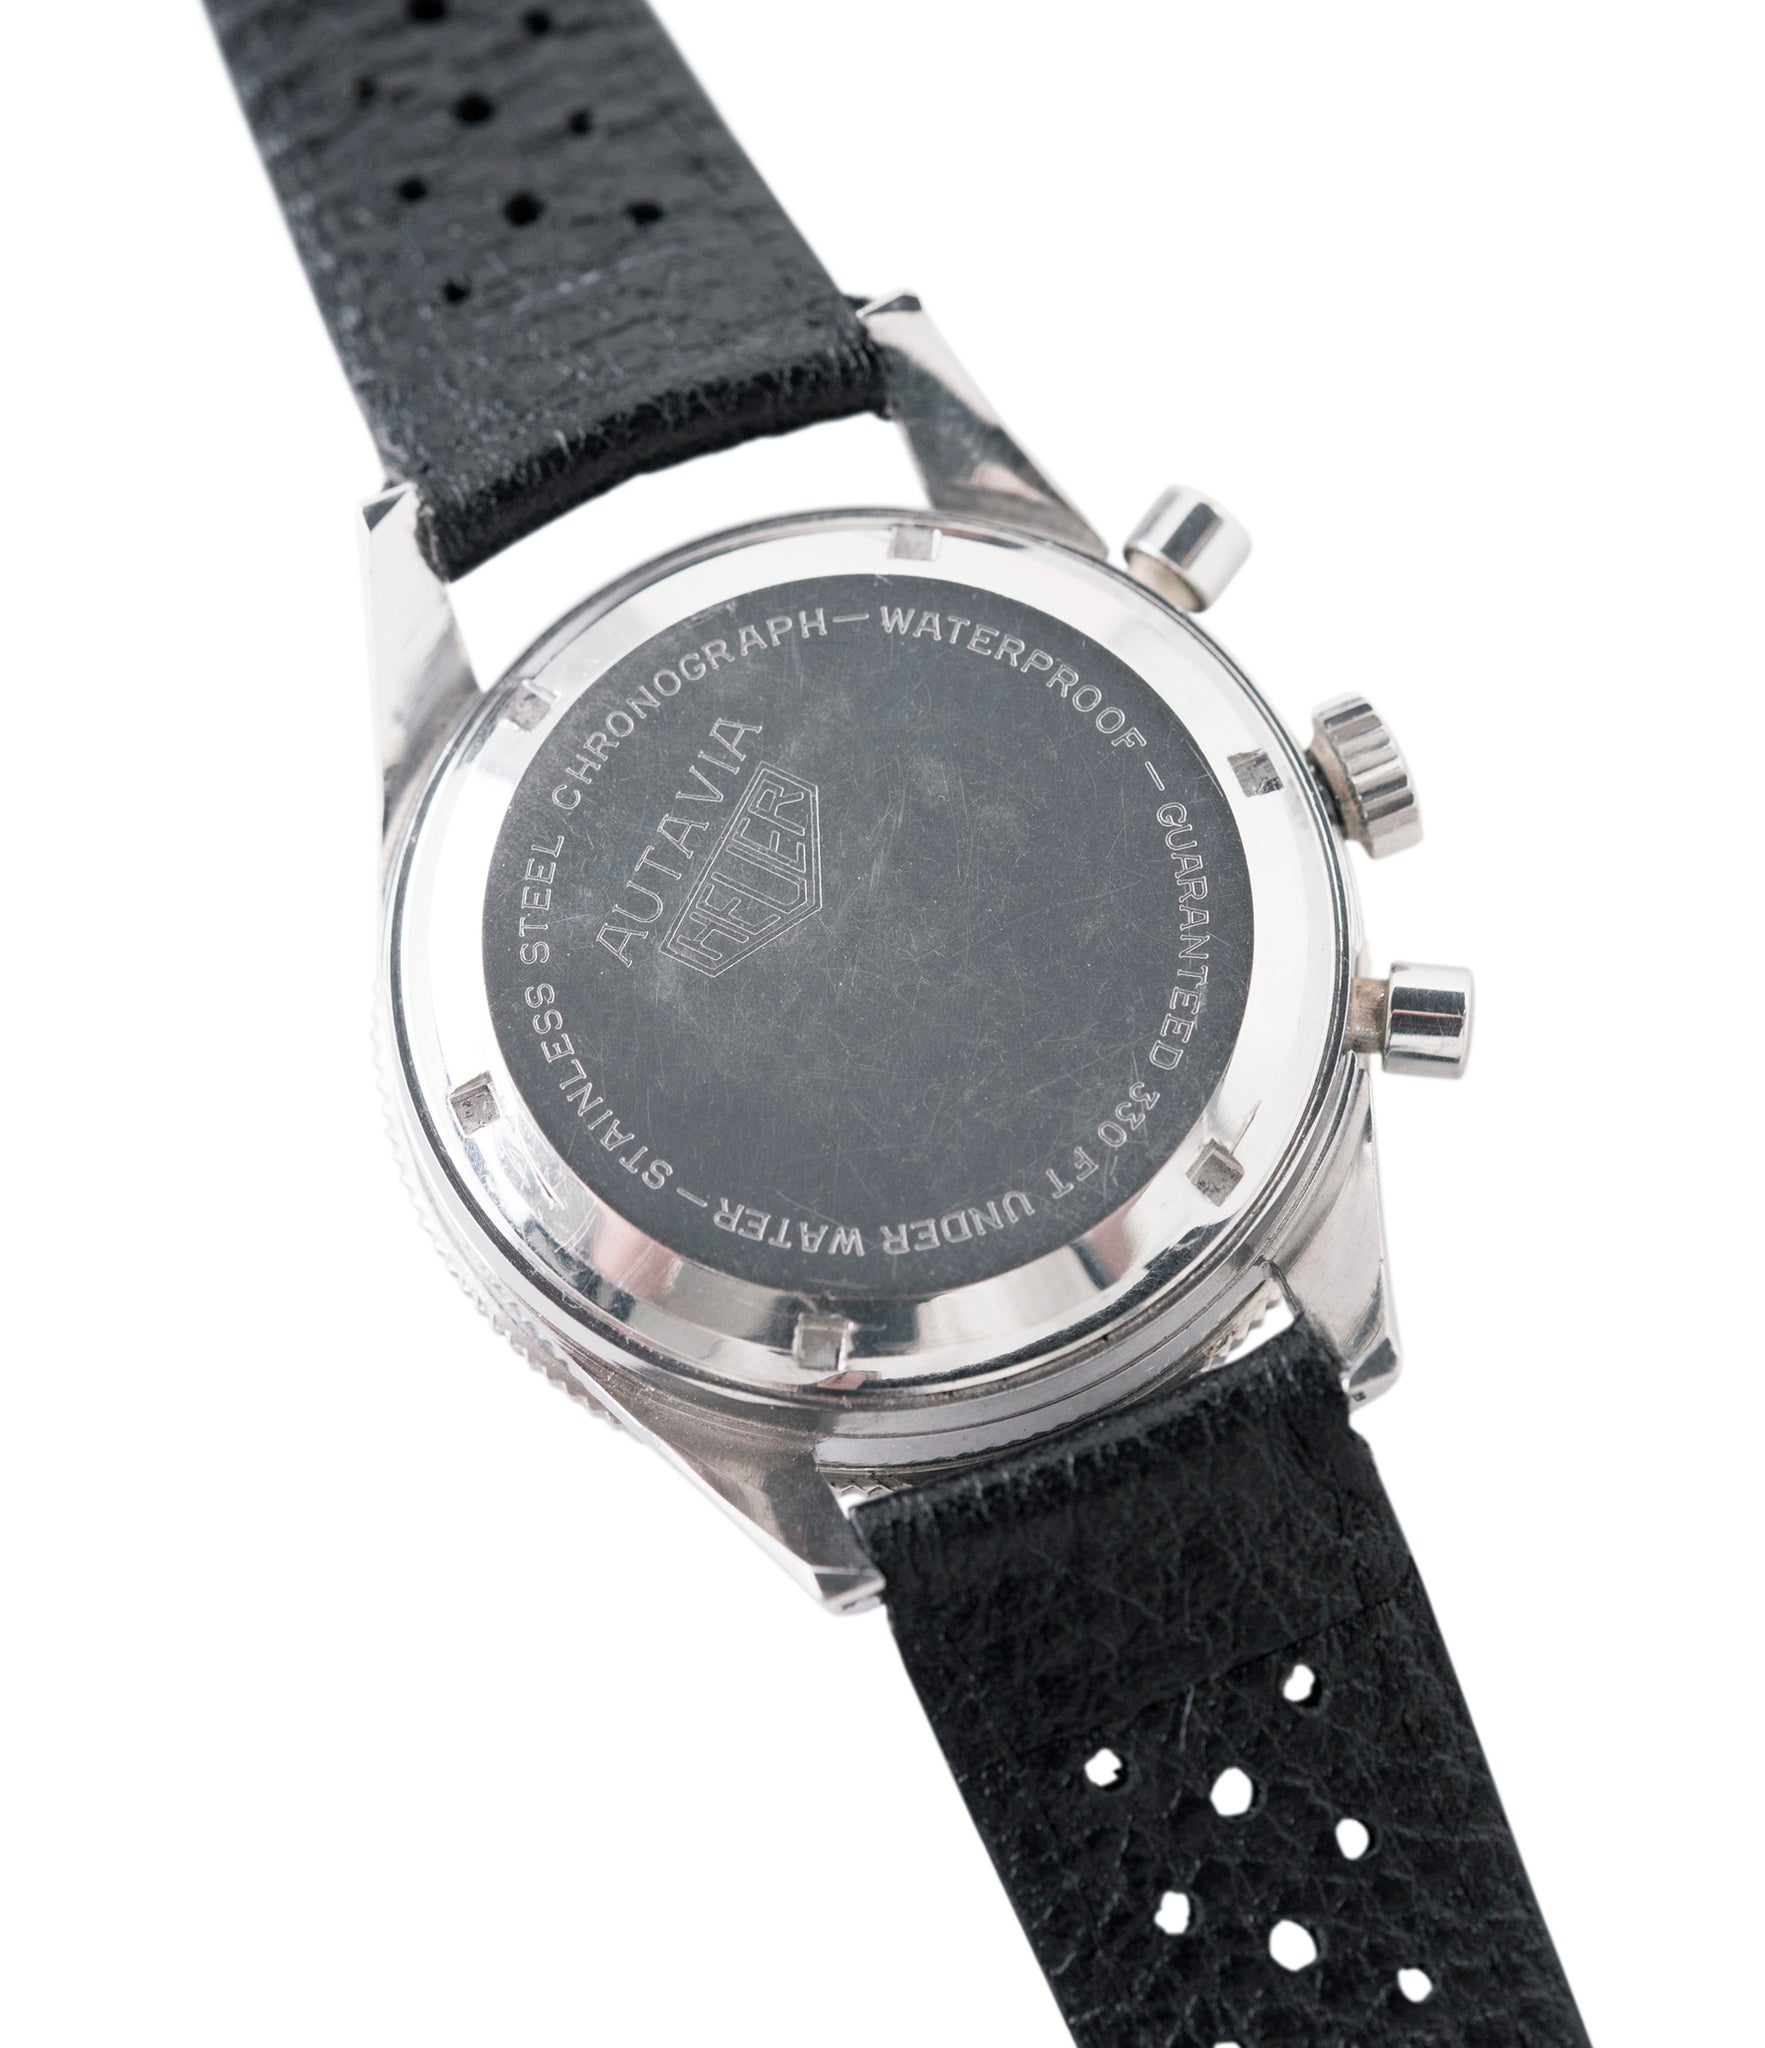 engraved caseback vintage Heuer Autavia Rindt 2446 rare steel chronograph sport racing watch  for sale